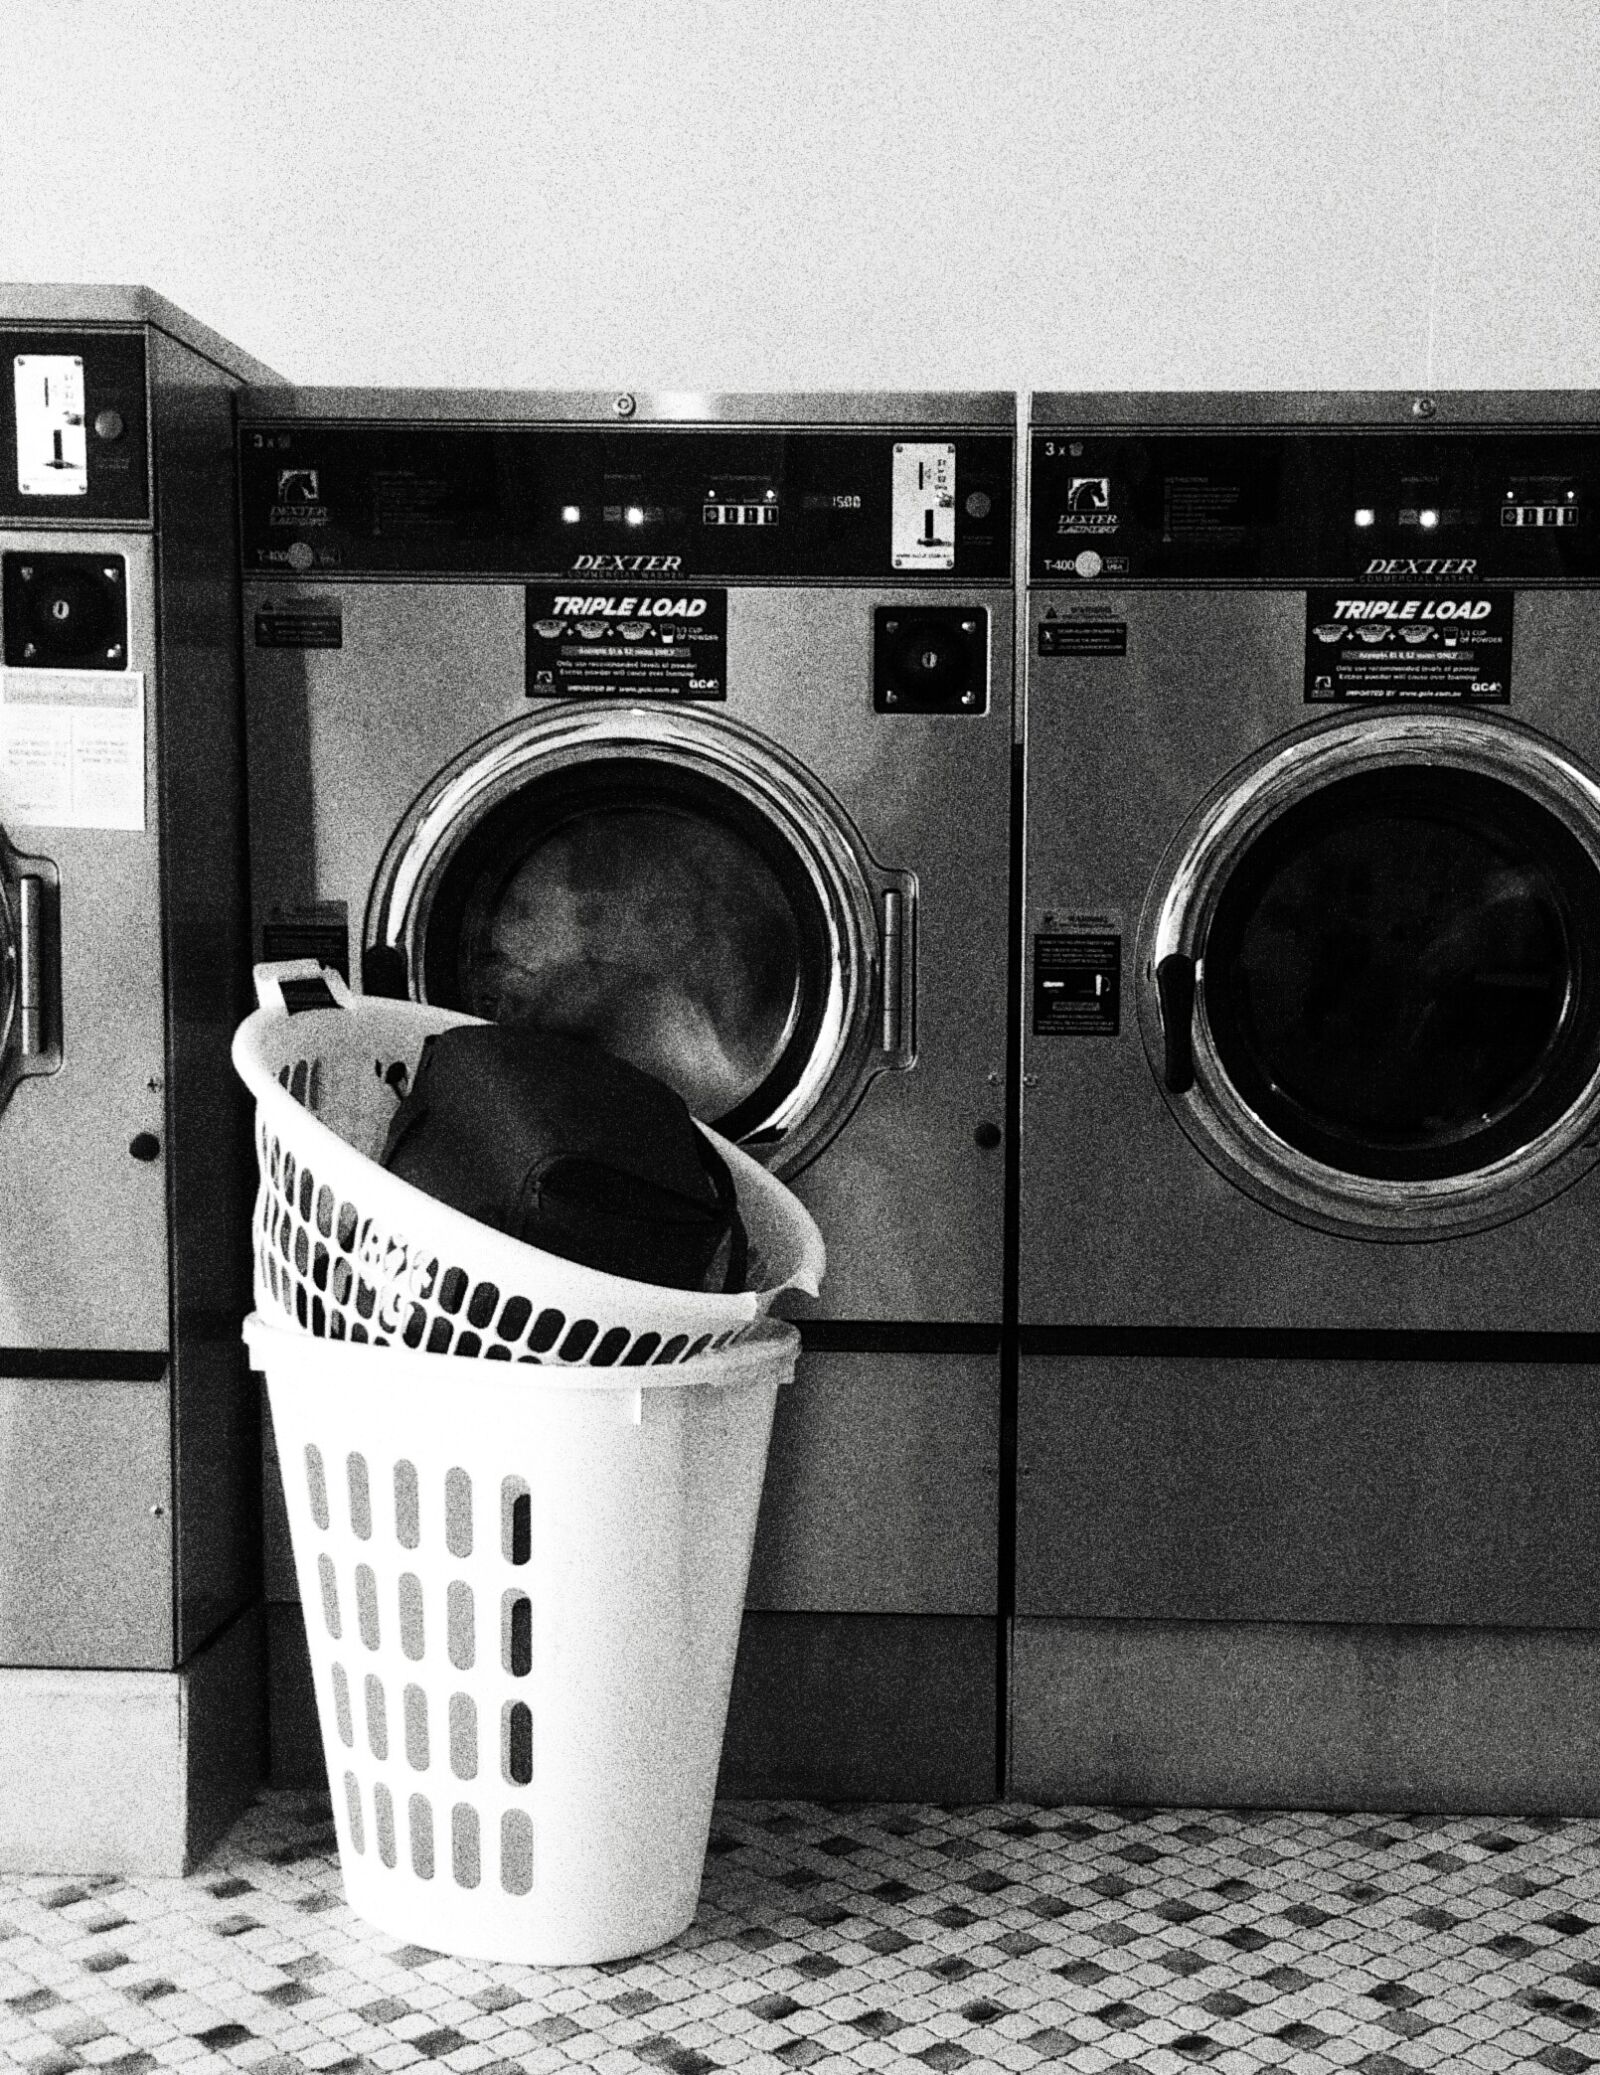 LG D80 sample photo. Laundromat, laundry, launderette photography